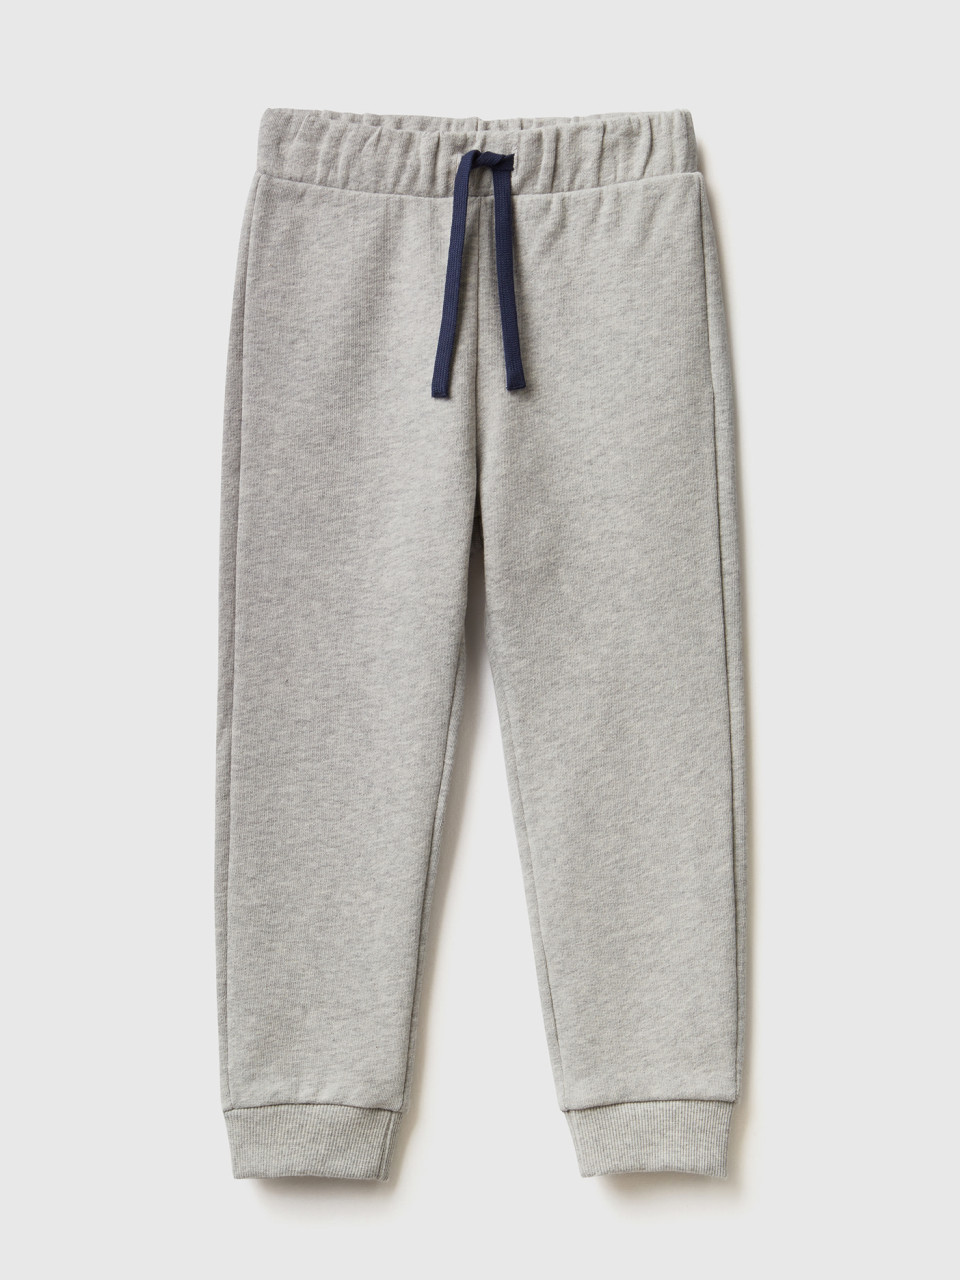 Benetton, Sweatpants With Pocket, Light Gray, Kids